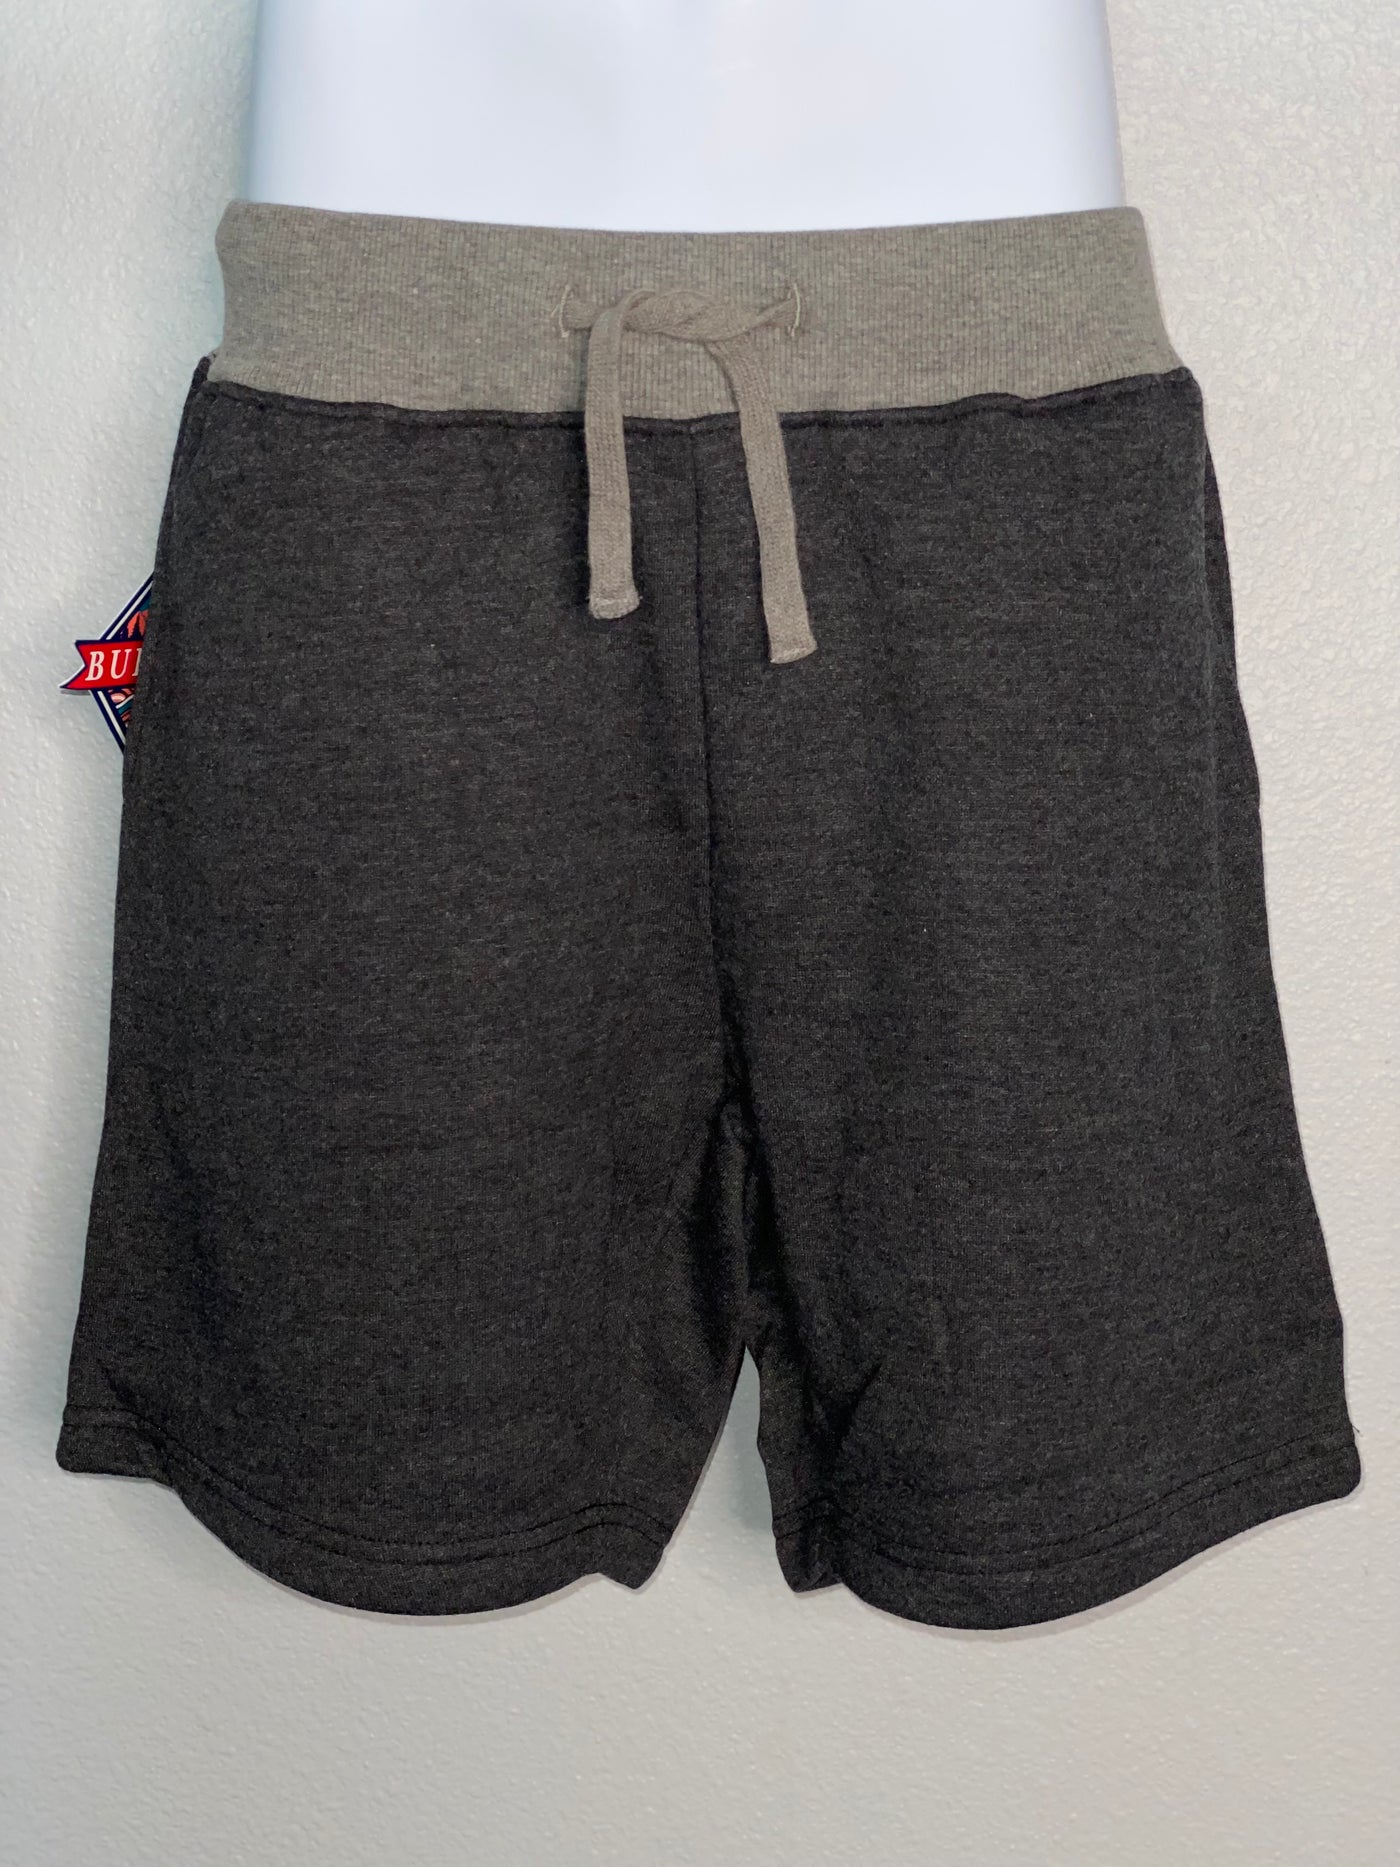 Heather Black Fleece Shorts with Camo Lined Pockets Unisex